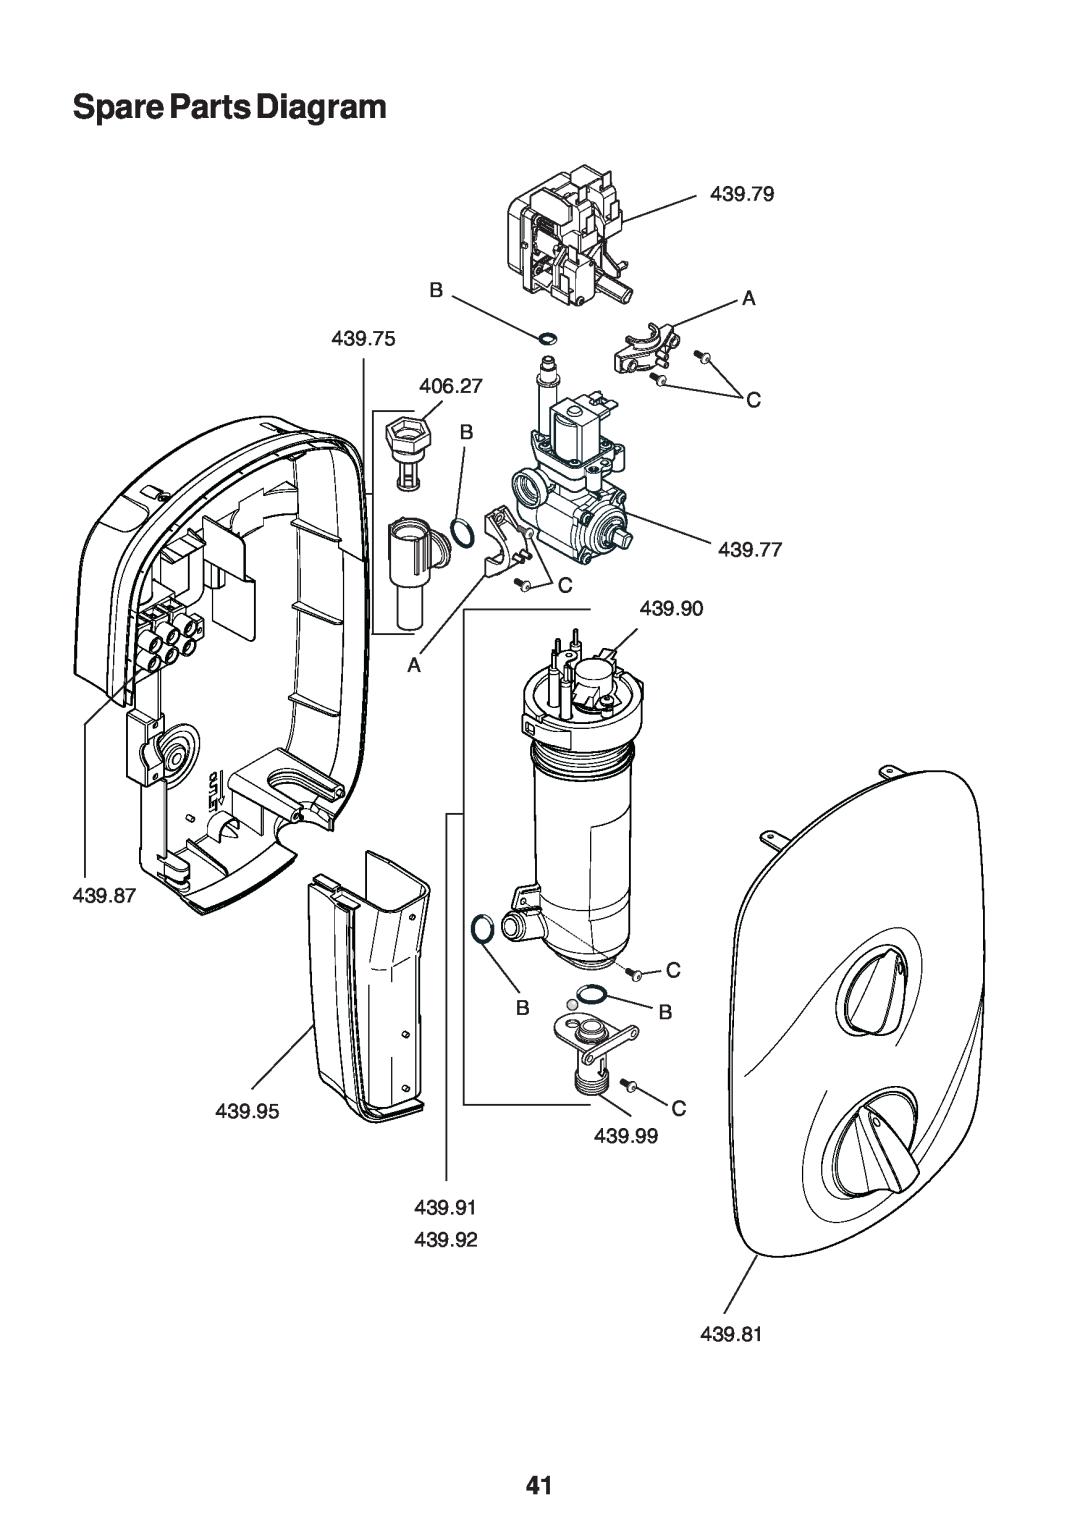 Kohler Electric Shower manual Spare Parts Diagram, 439.79, 439.75, 406.27, 439.77, 439.90, 439.87, 439.95, 439.99, 439.91 